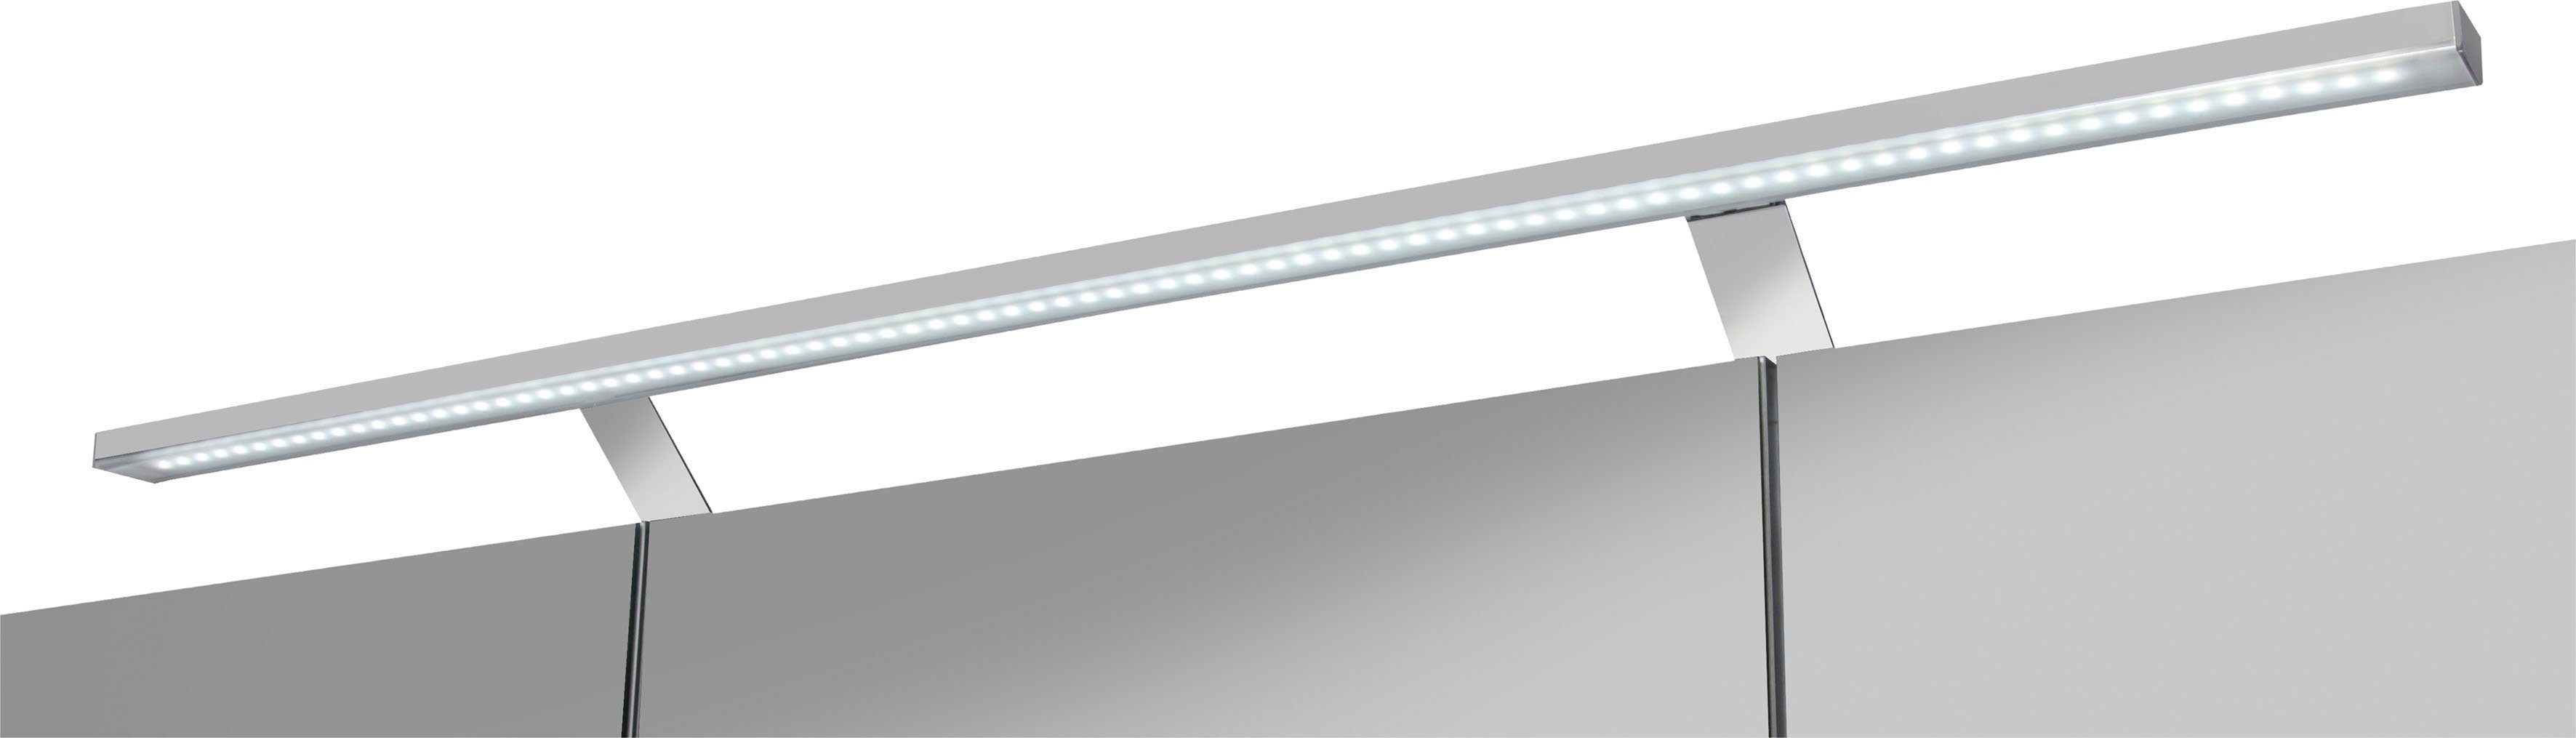 Torino Schalter-/Steckdosenbox | Spiegelschrank 120 welltime cm, basaltgrau Breite LED-Beleuchtung, basaltgrau 3-türig,